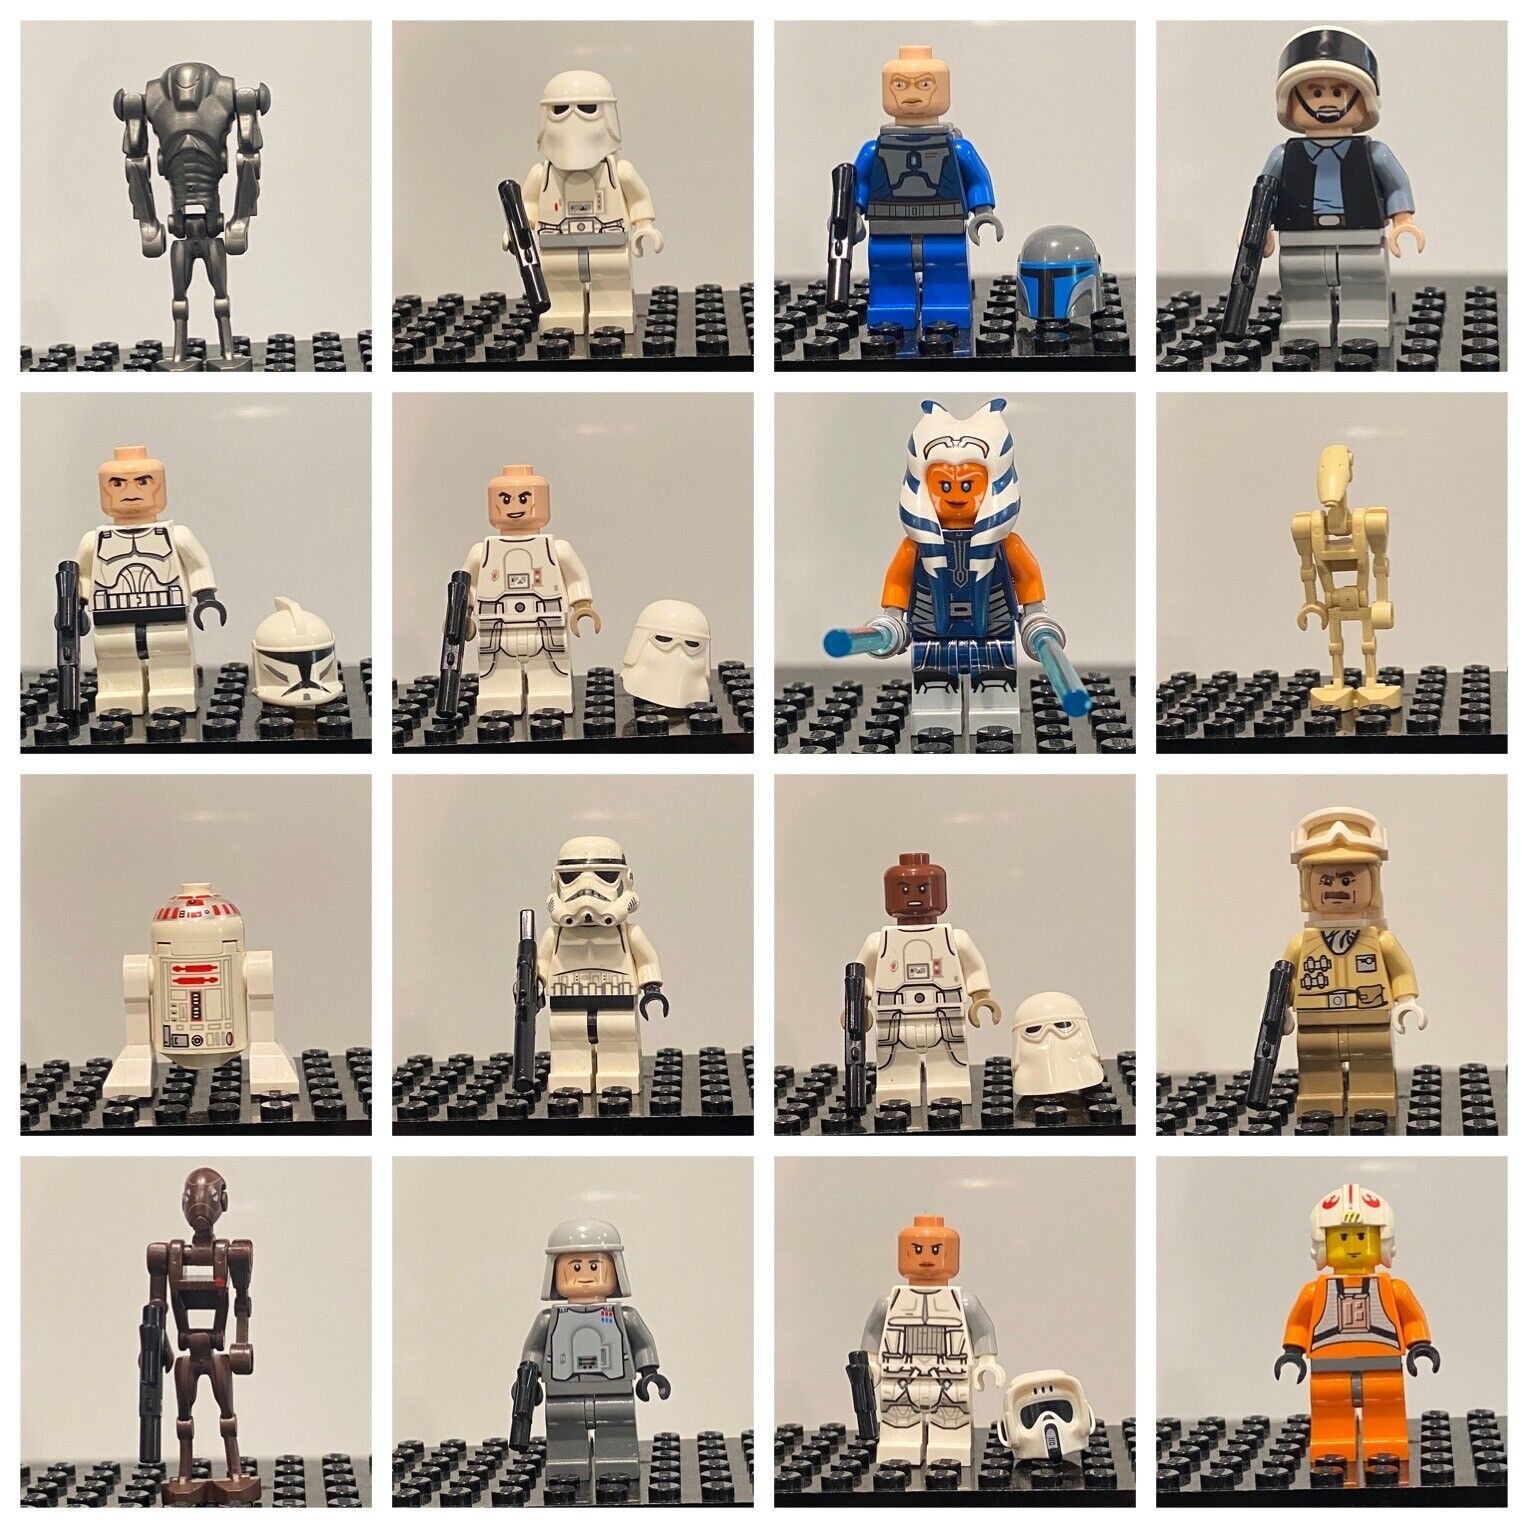 Lego Star Wars Minifigures - YOU CHOSE